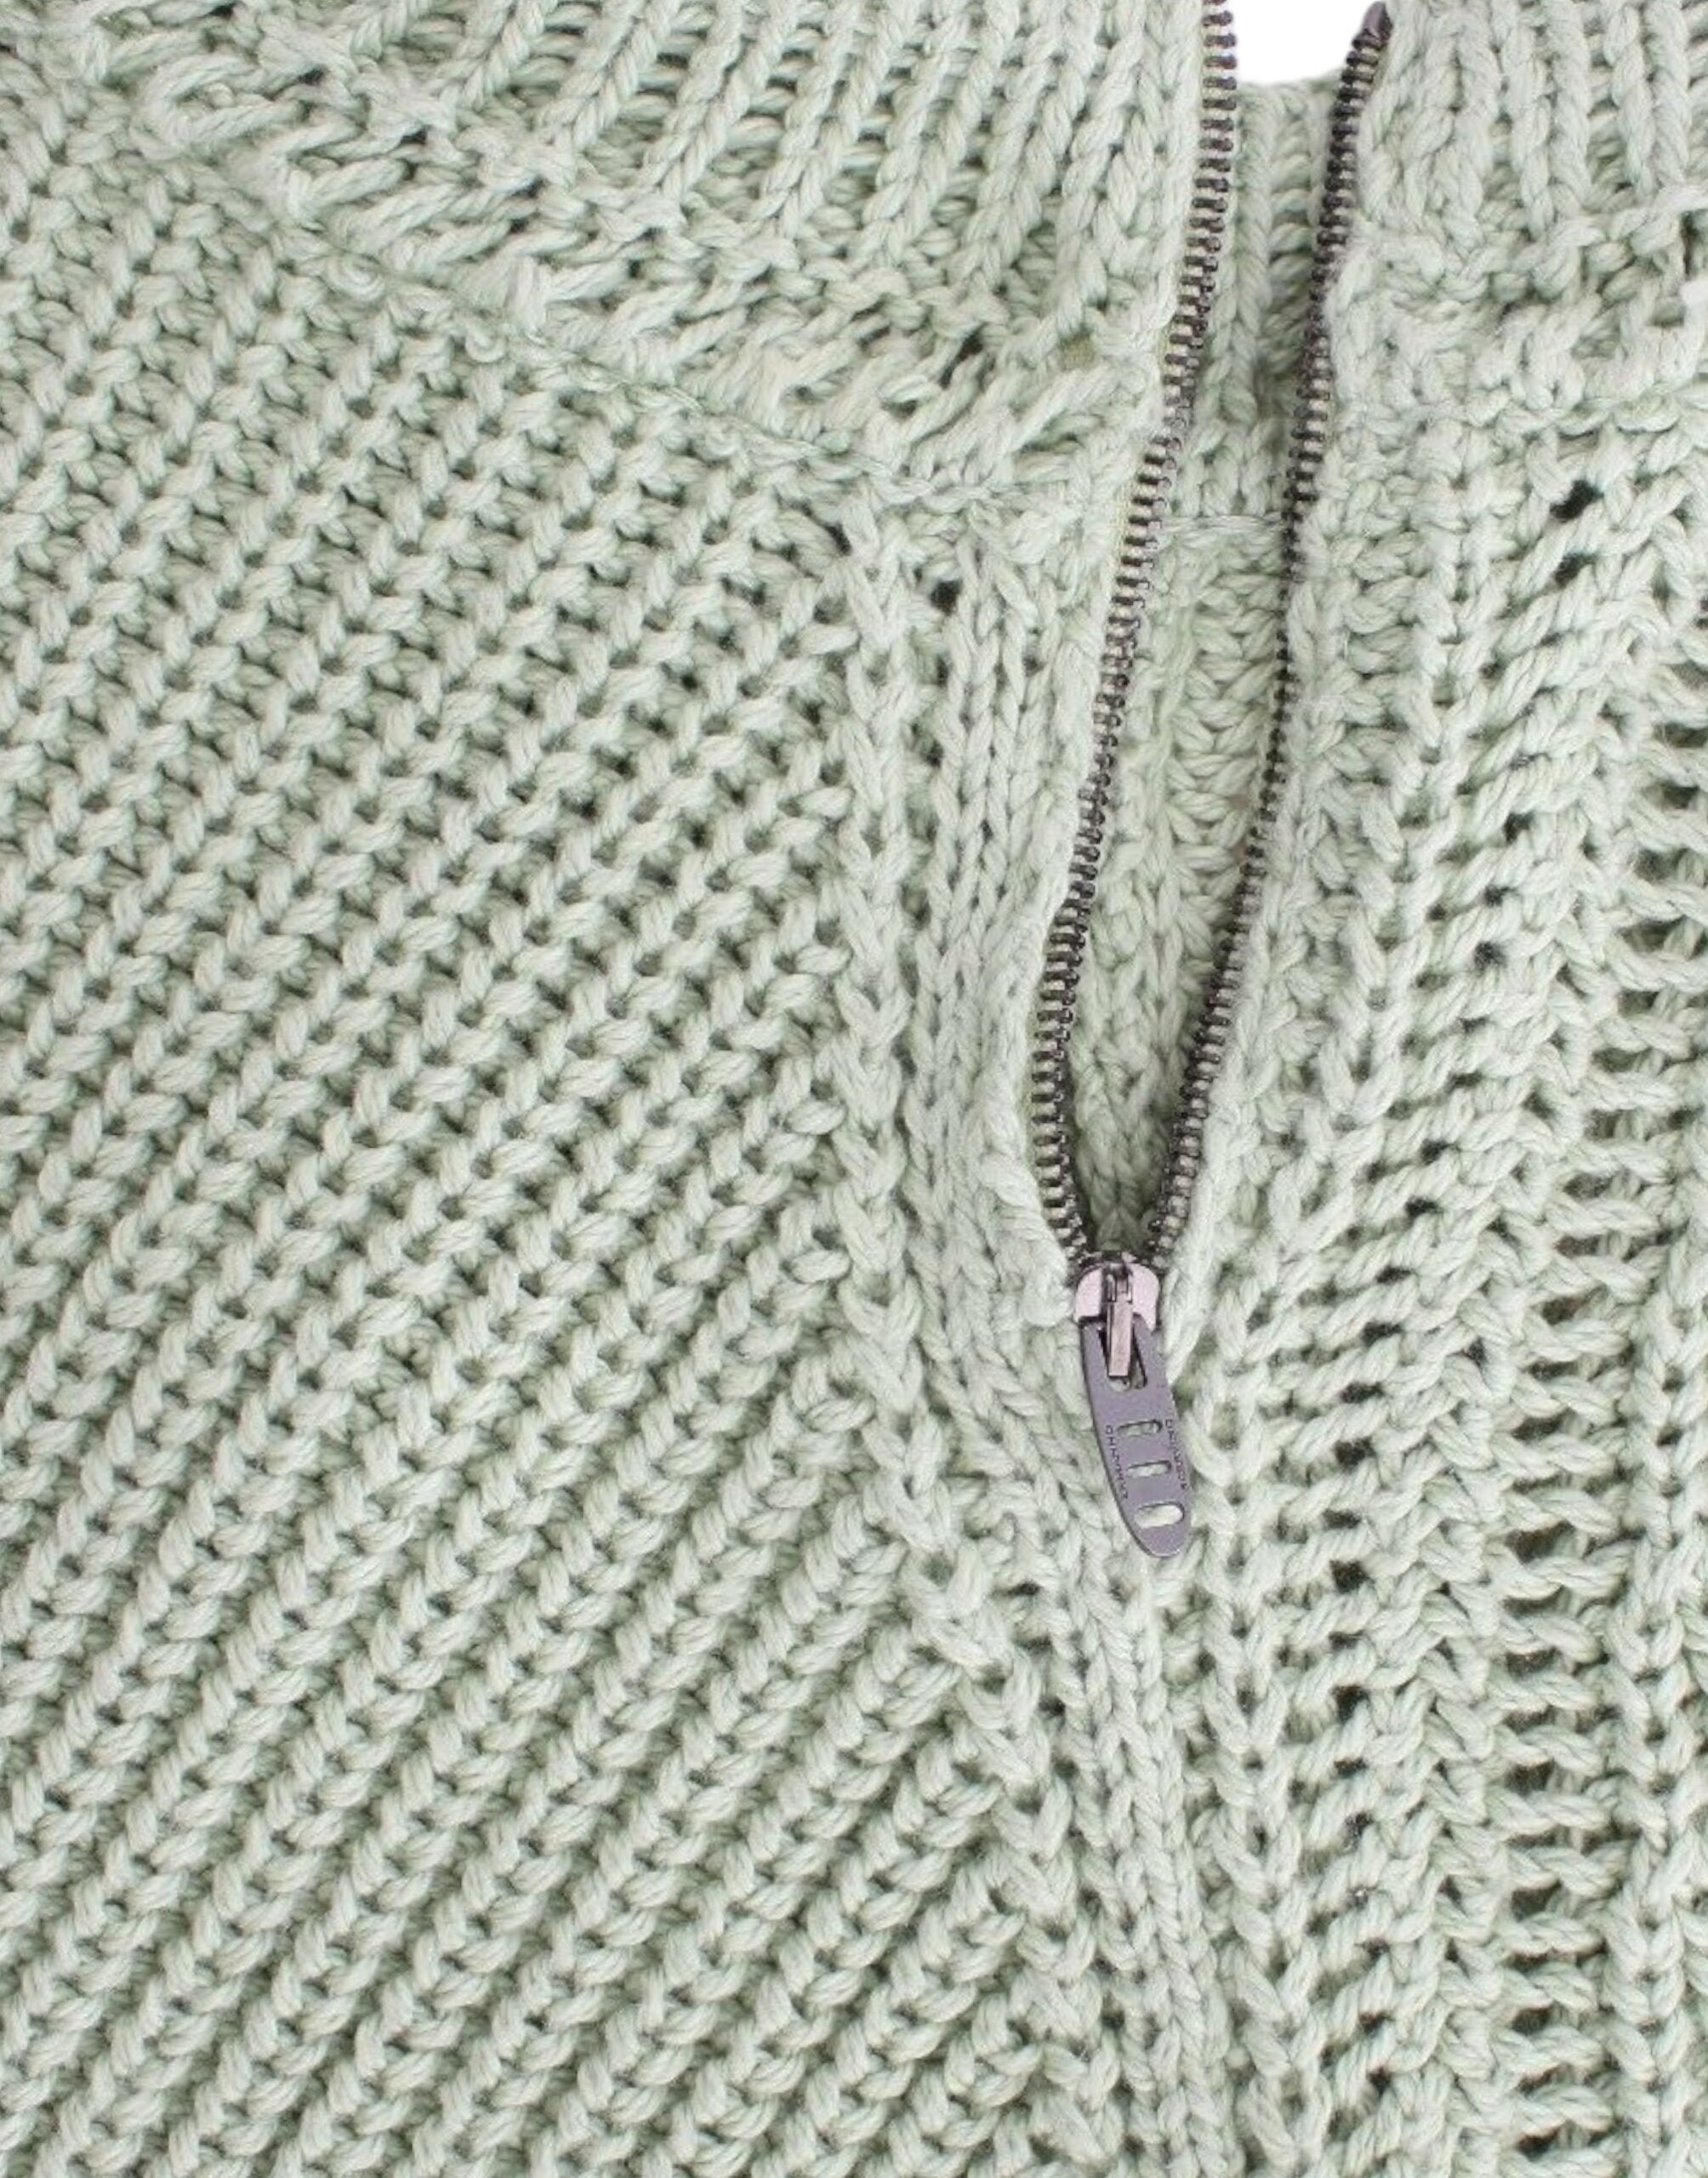 Ermanno Scervino Chic Green Cropped Cotton Sweater